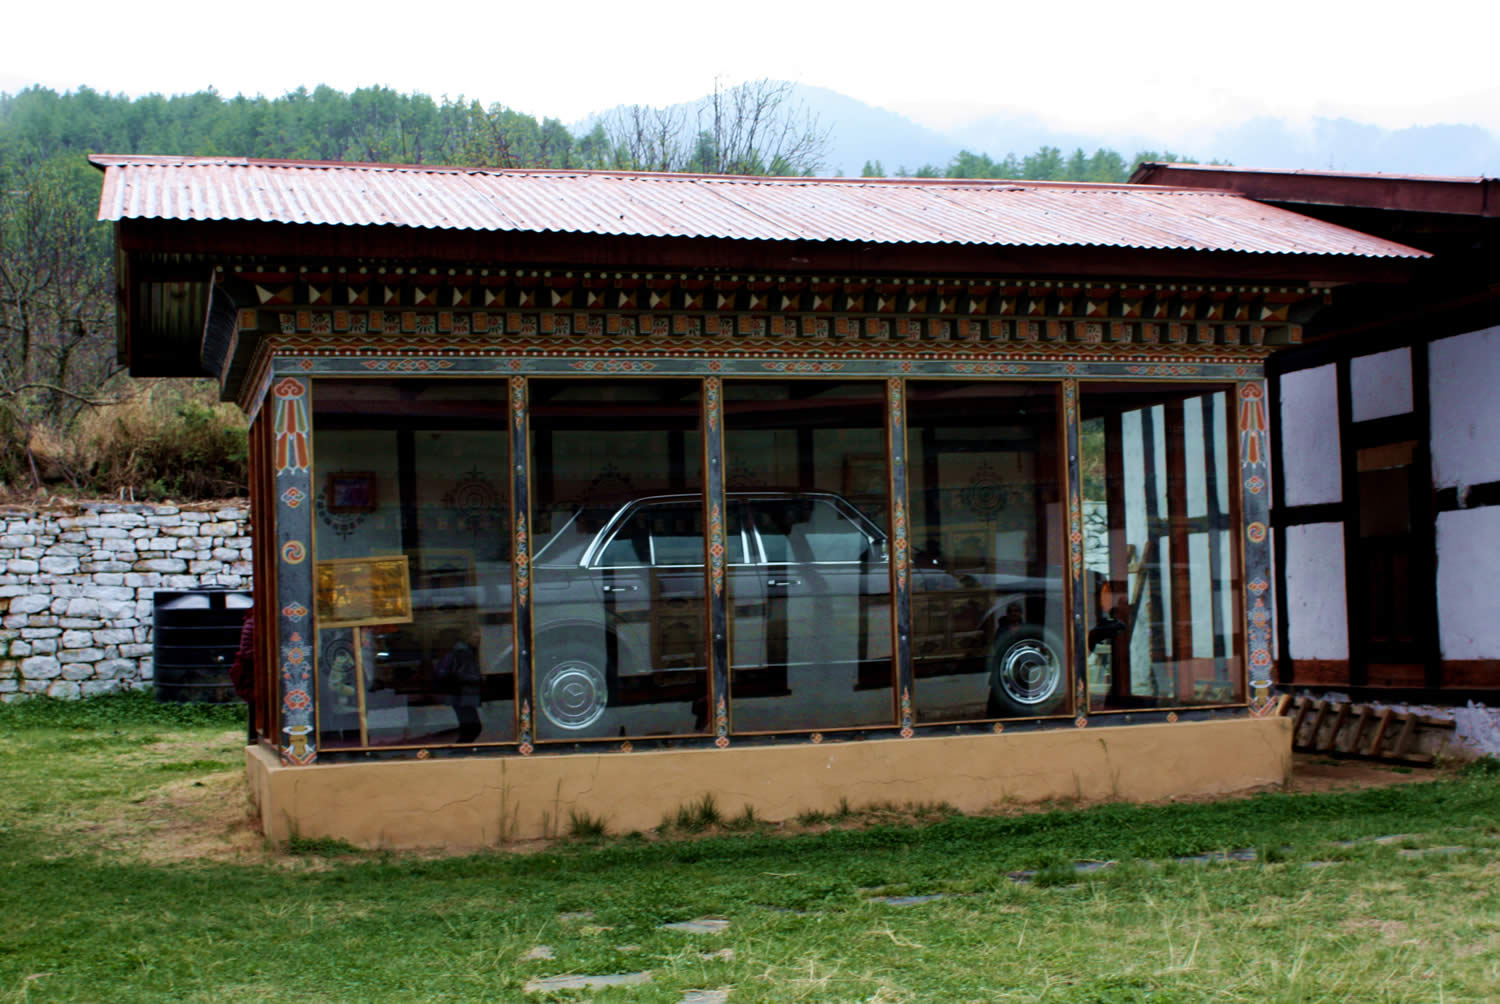 Dilgo Khyentse's automobile preserved in the Memorial Museum in Paro, Bhutan.